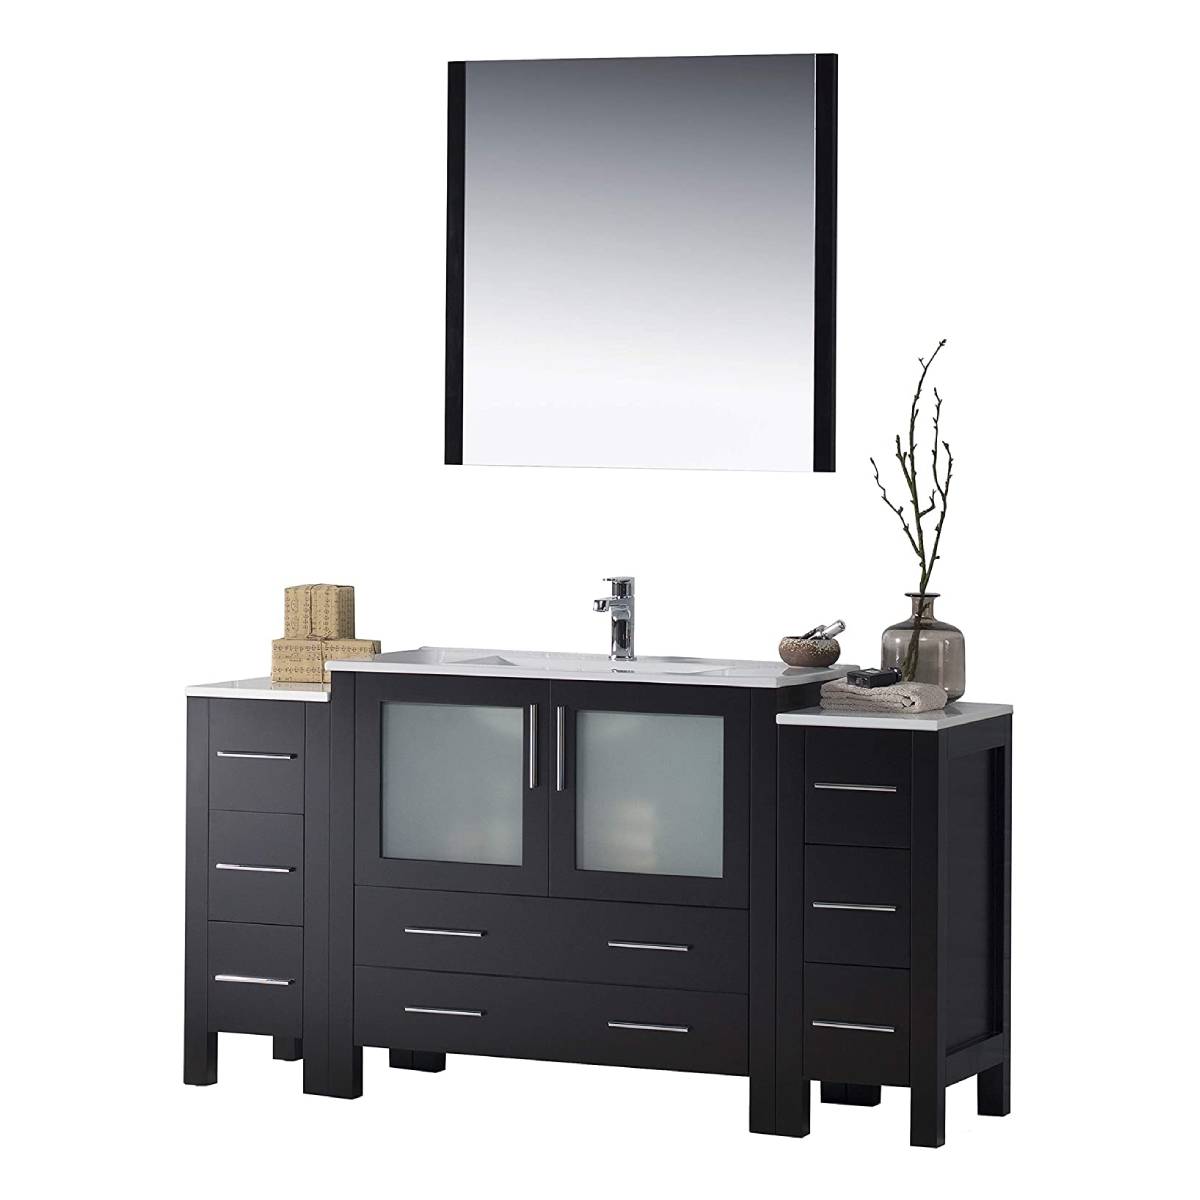 Sydney - 60 Inch Vanity with Ceramic Sink & Mirror - Espresso - Molaix842708125186Sydney001 60S2 02 C M